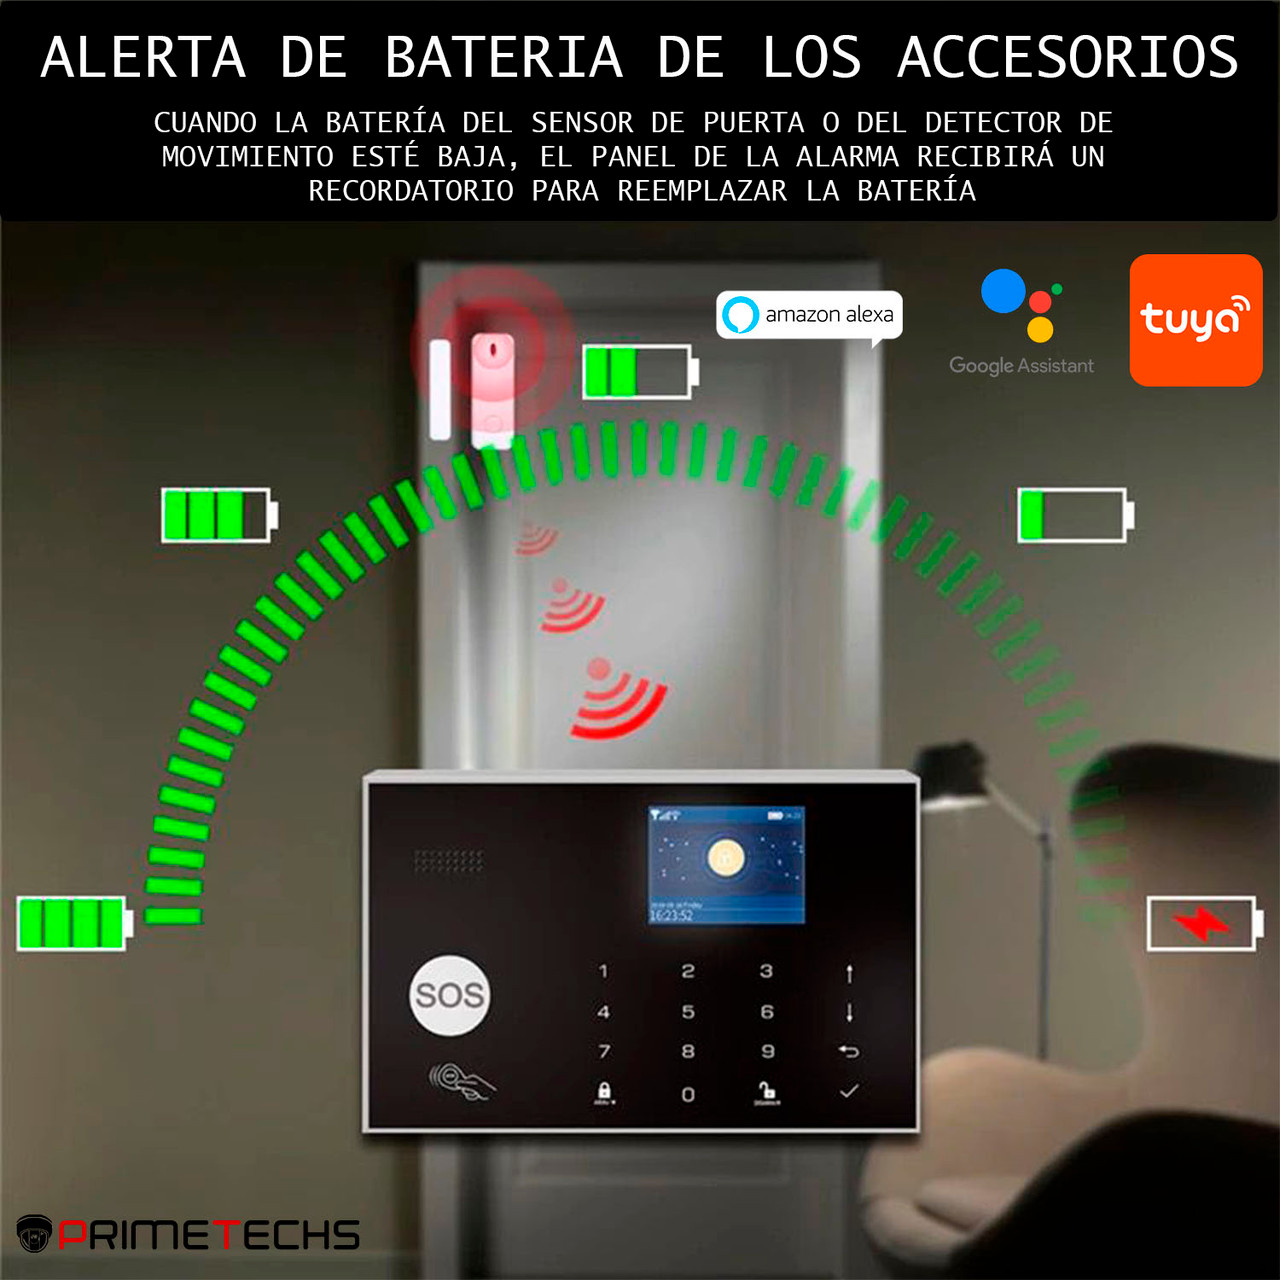 Alarma inalámbrica PRIMETECHS WIFI con pantalla touchscreen para sensores  inalámbricos y alámbricos, sirena exterior y notificación por aplicación  celular TUYA. Compatible con Alexa y Google Home.